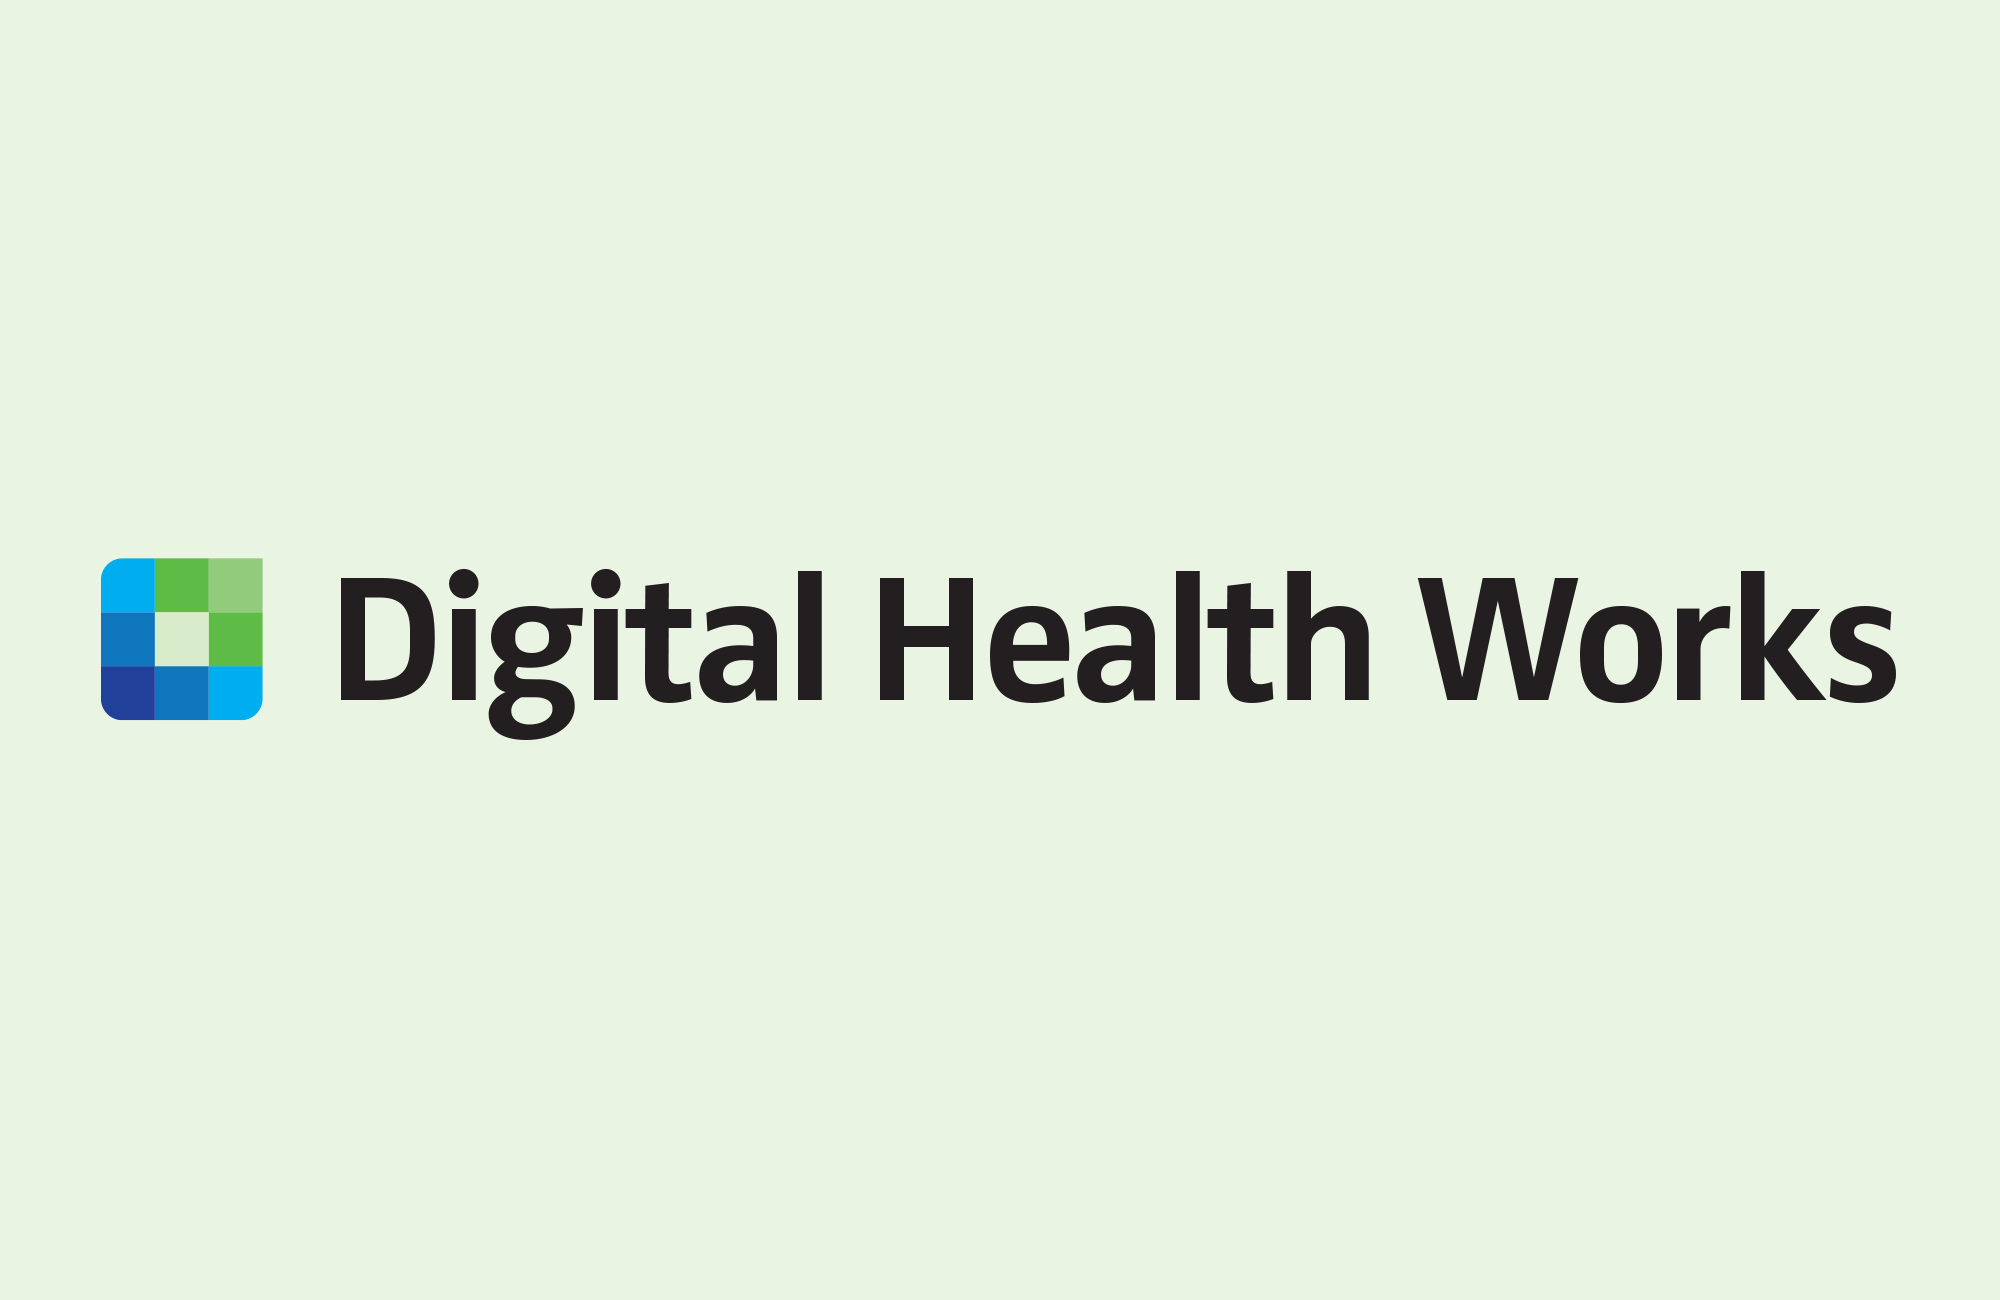 Digital Health Works